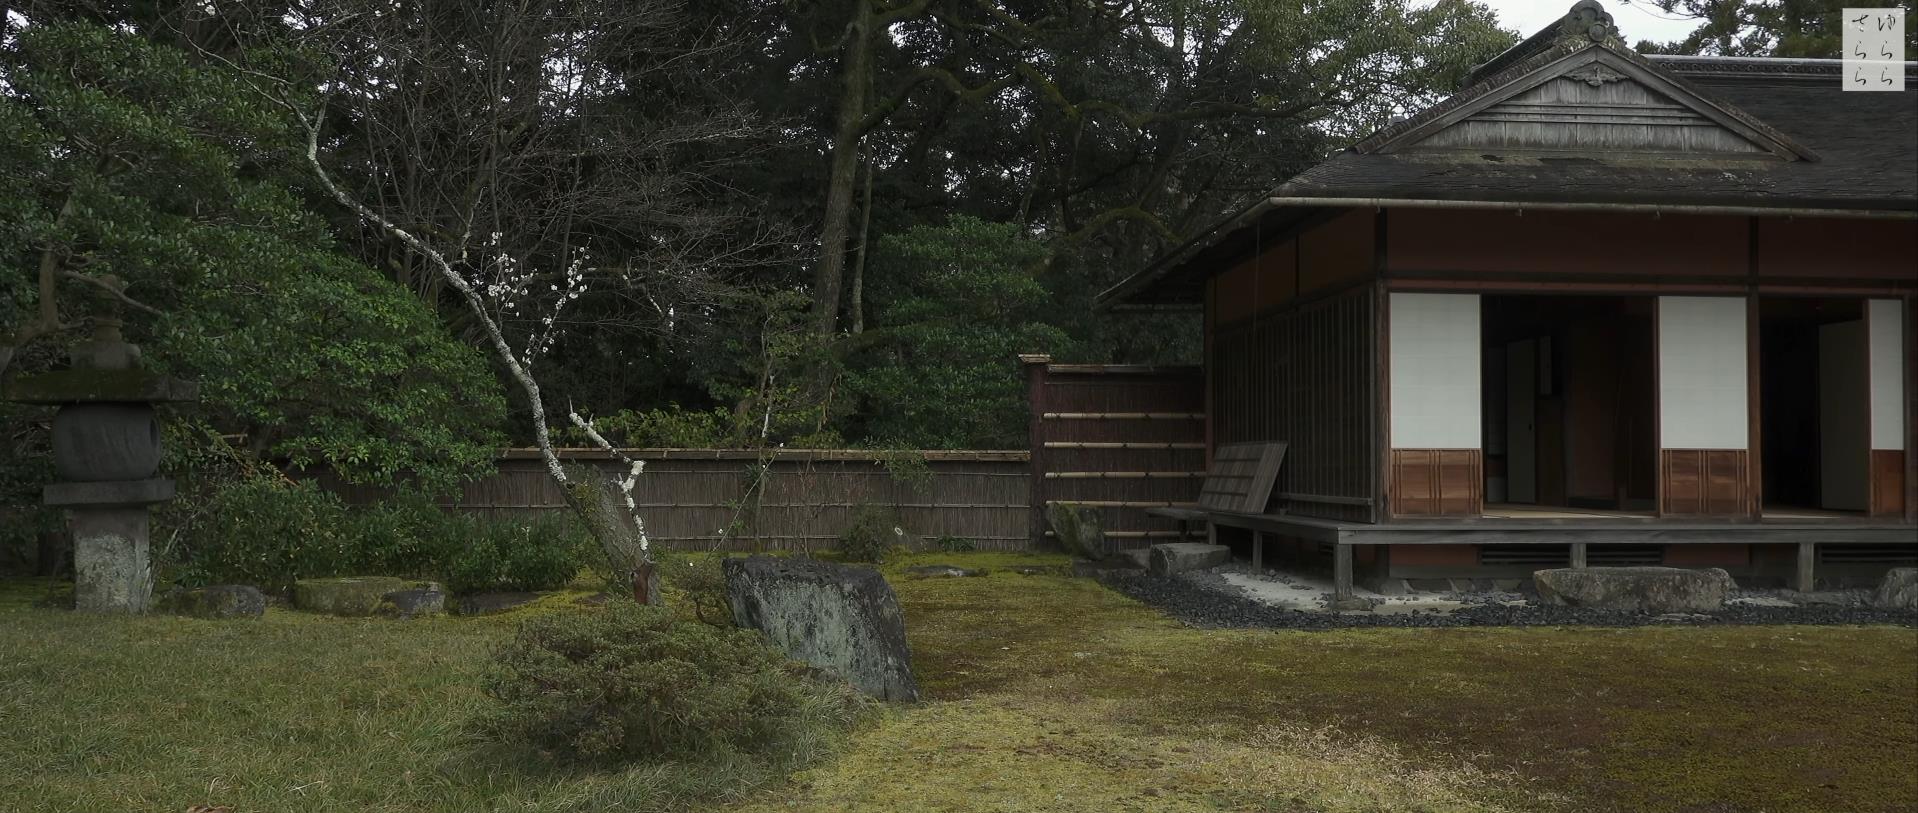 Wabi-Sabi-侘寂庭院,侘寂庭院,日本,侘寂設計,侘寂視頻下載,日式侘寂庭院